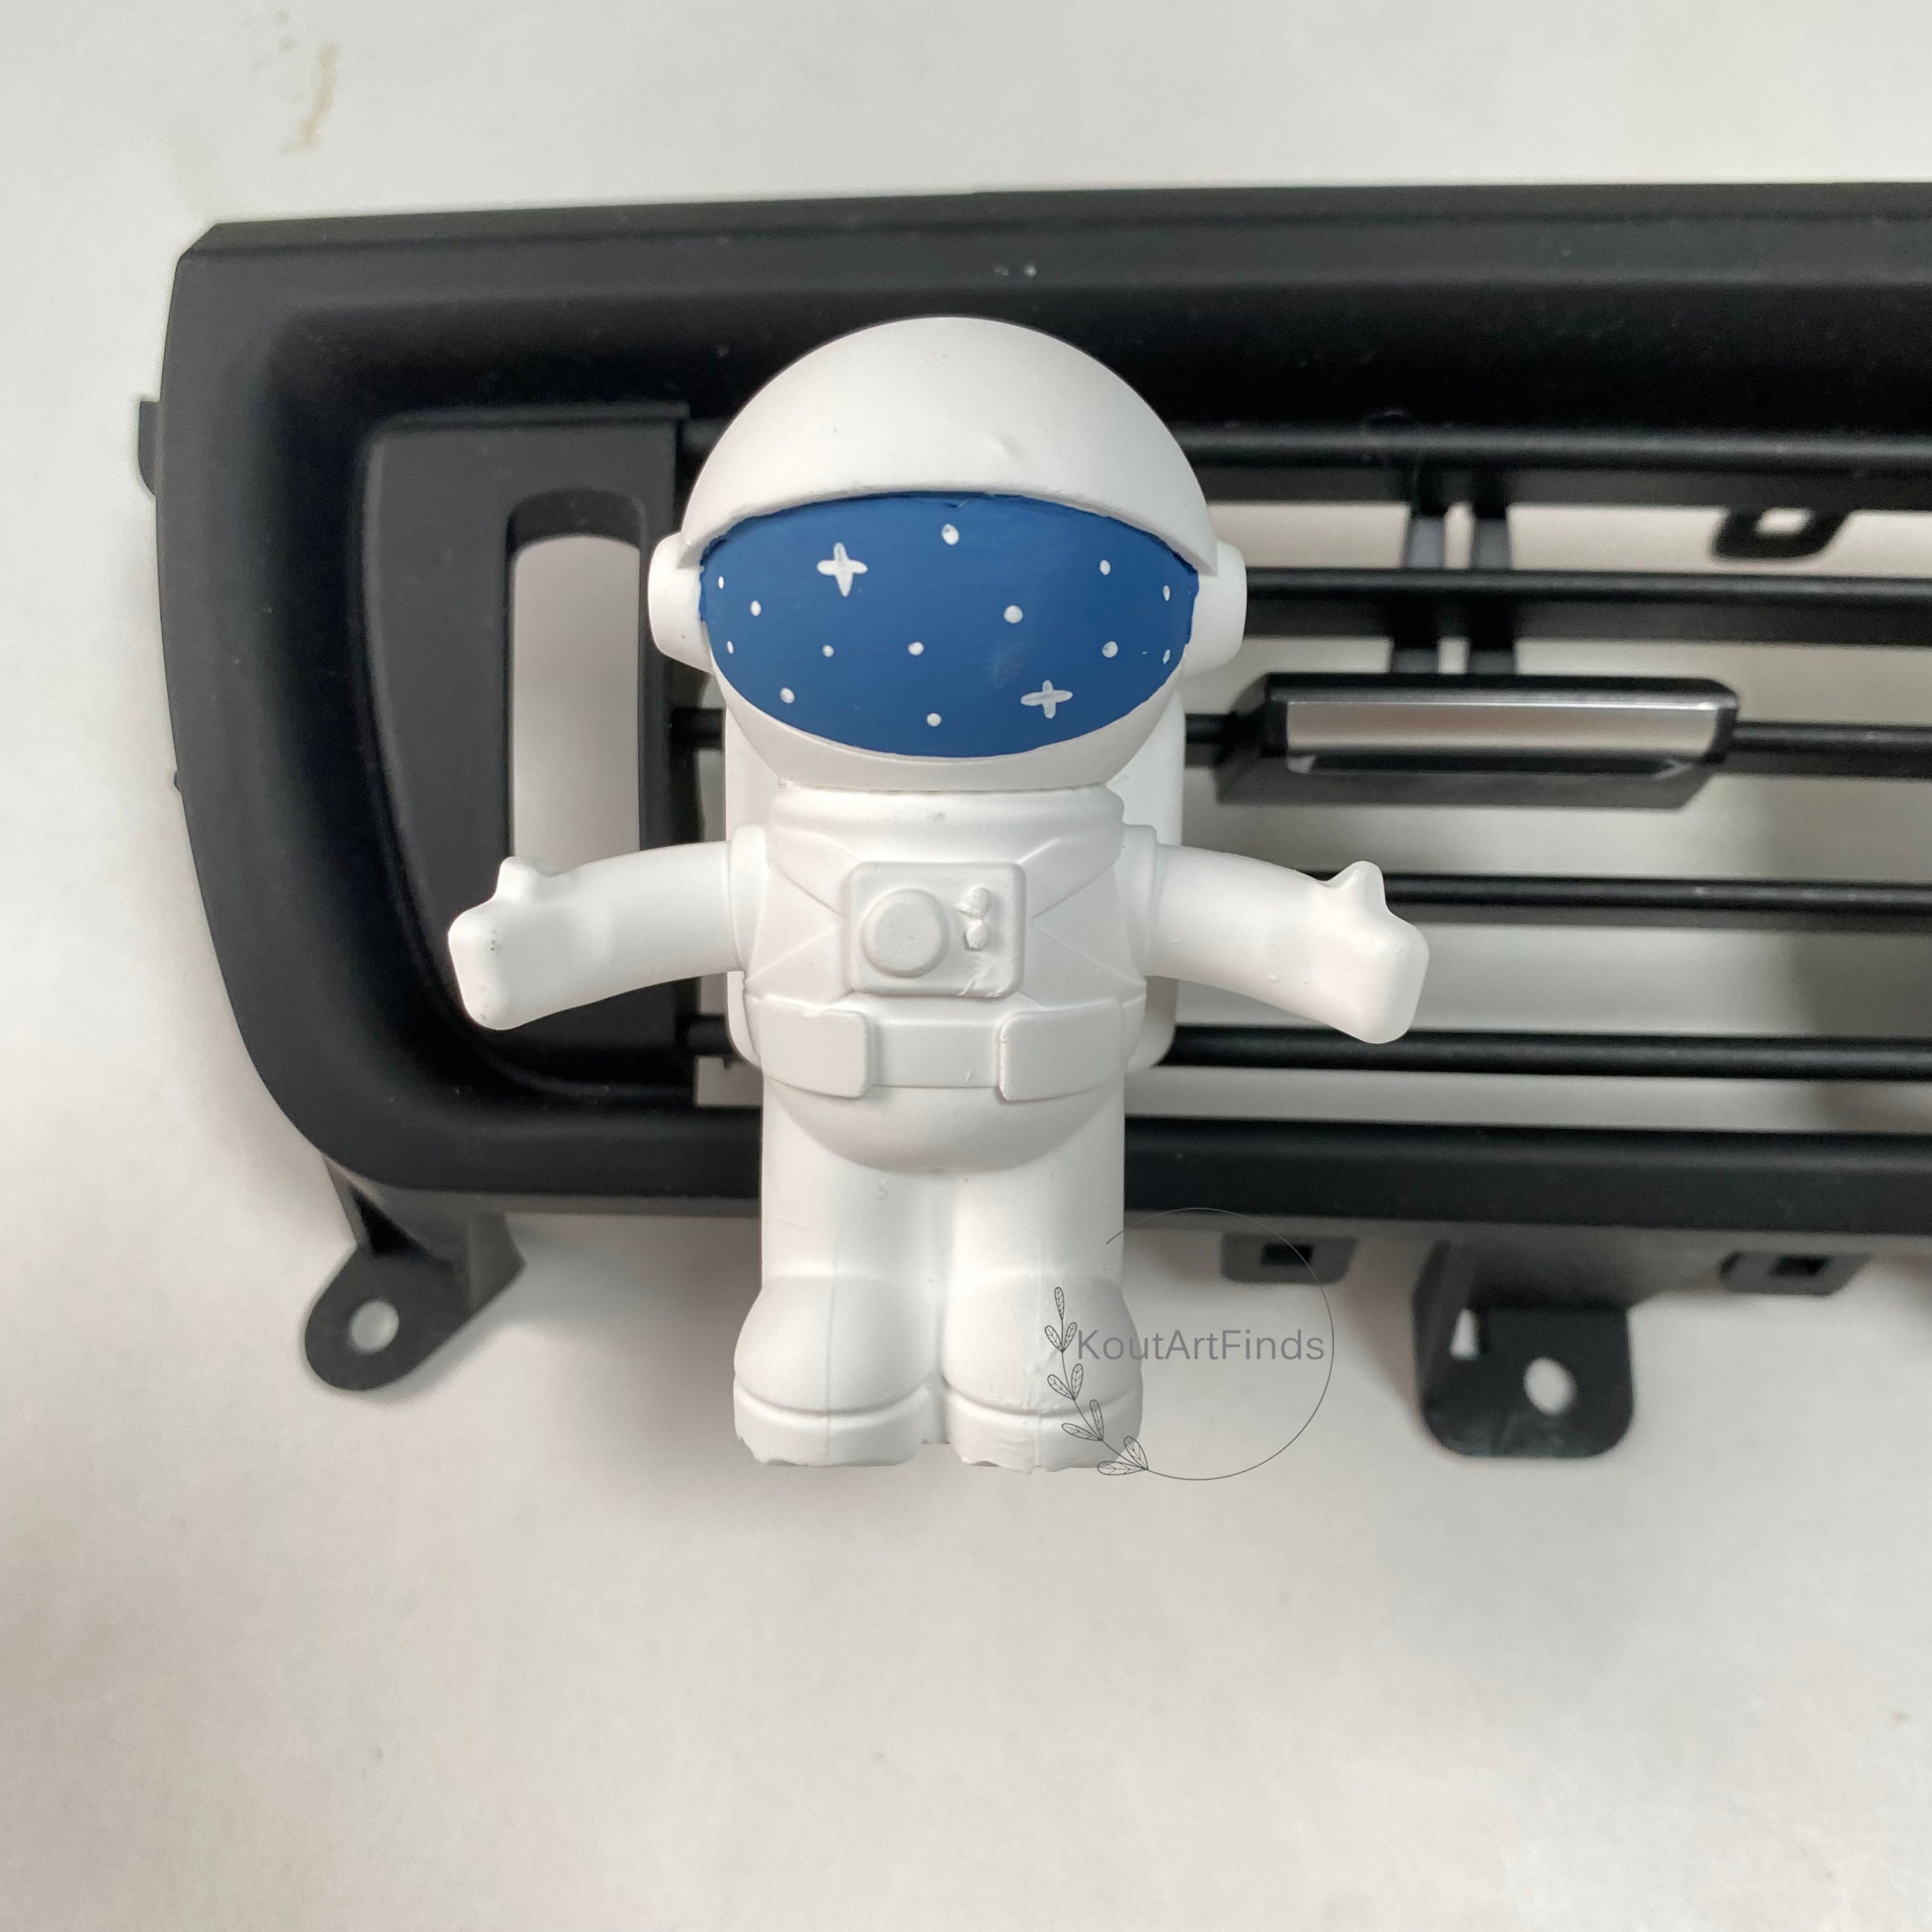 NUACOS Creative Astronaute Ornements Voiture Tableau de Bord Micro